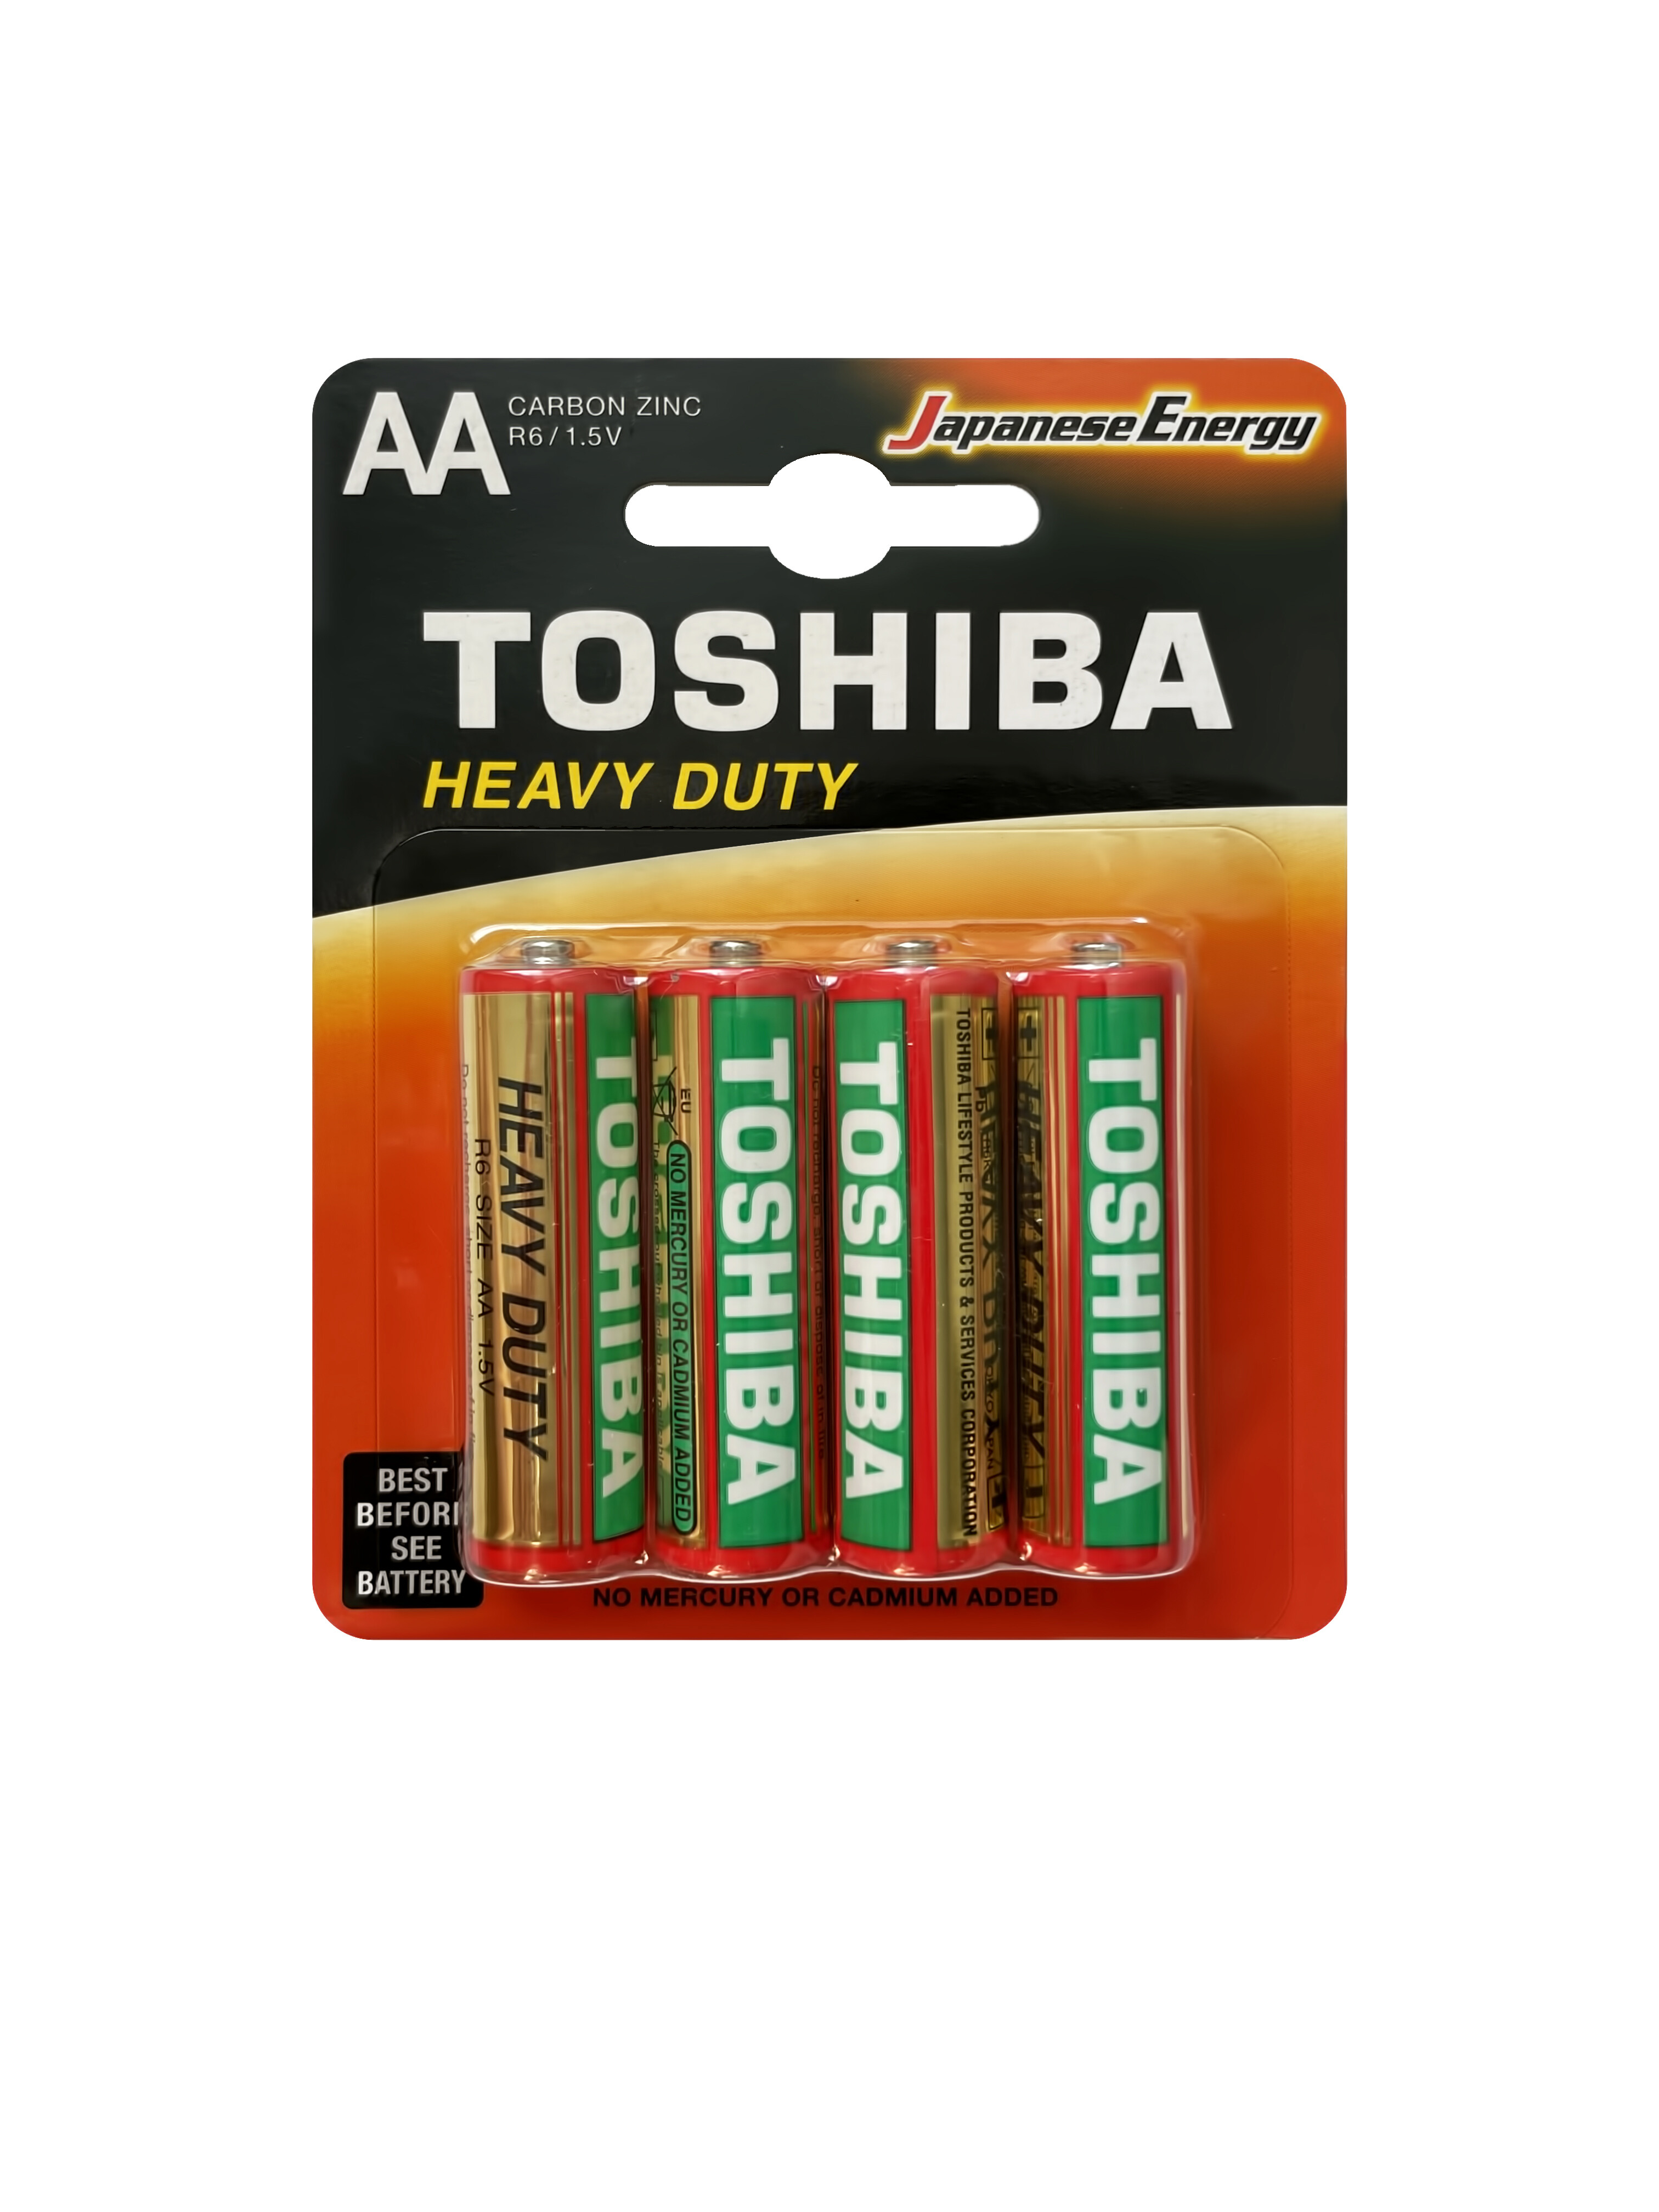 Батарейки Toshiba R6 солевые (zinc) ПАЛЬЧИК Heavy Duty (4шт) AA 1,5V батарейки toshiba lr20 щелочные alkaline бочка high power 2шт d 1 5v